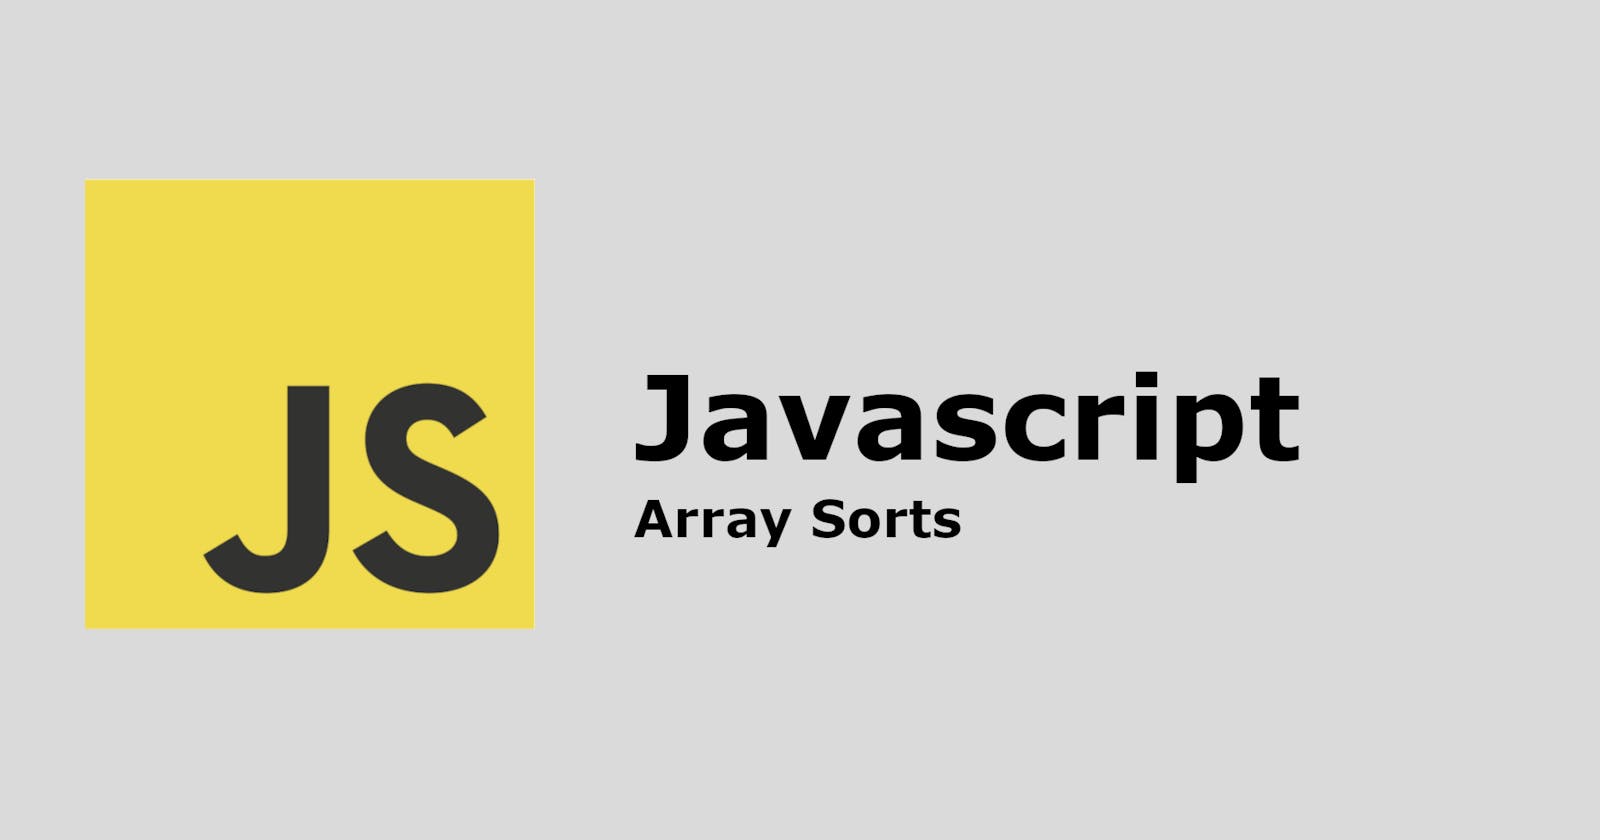 JavaScript Arrays Sorts